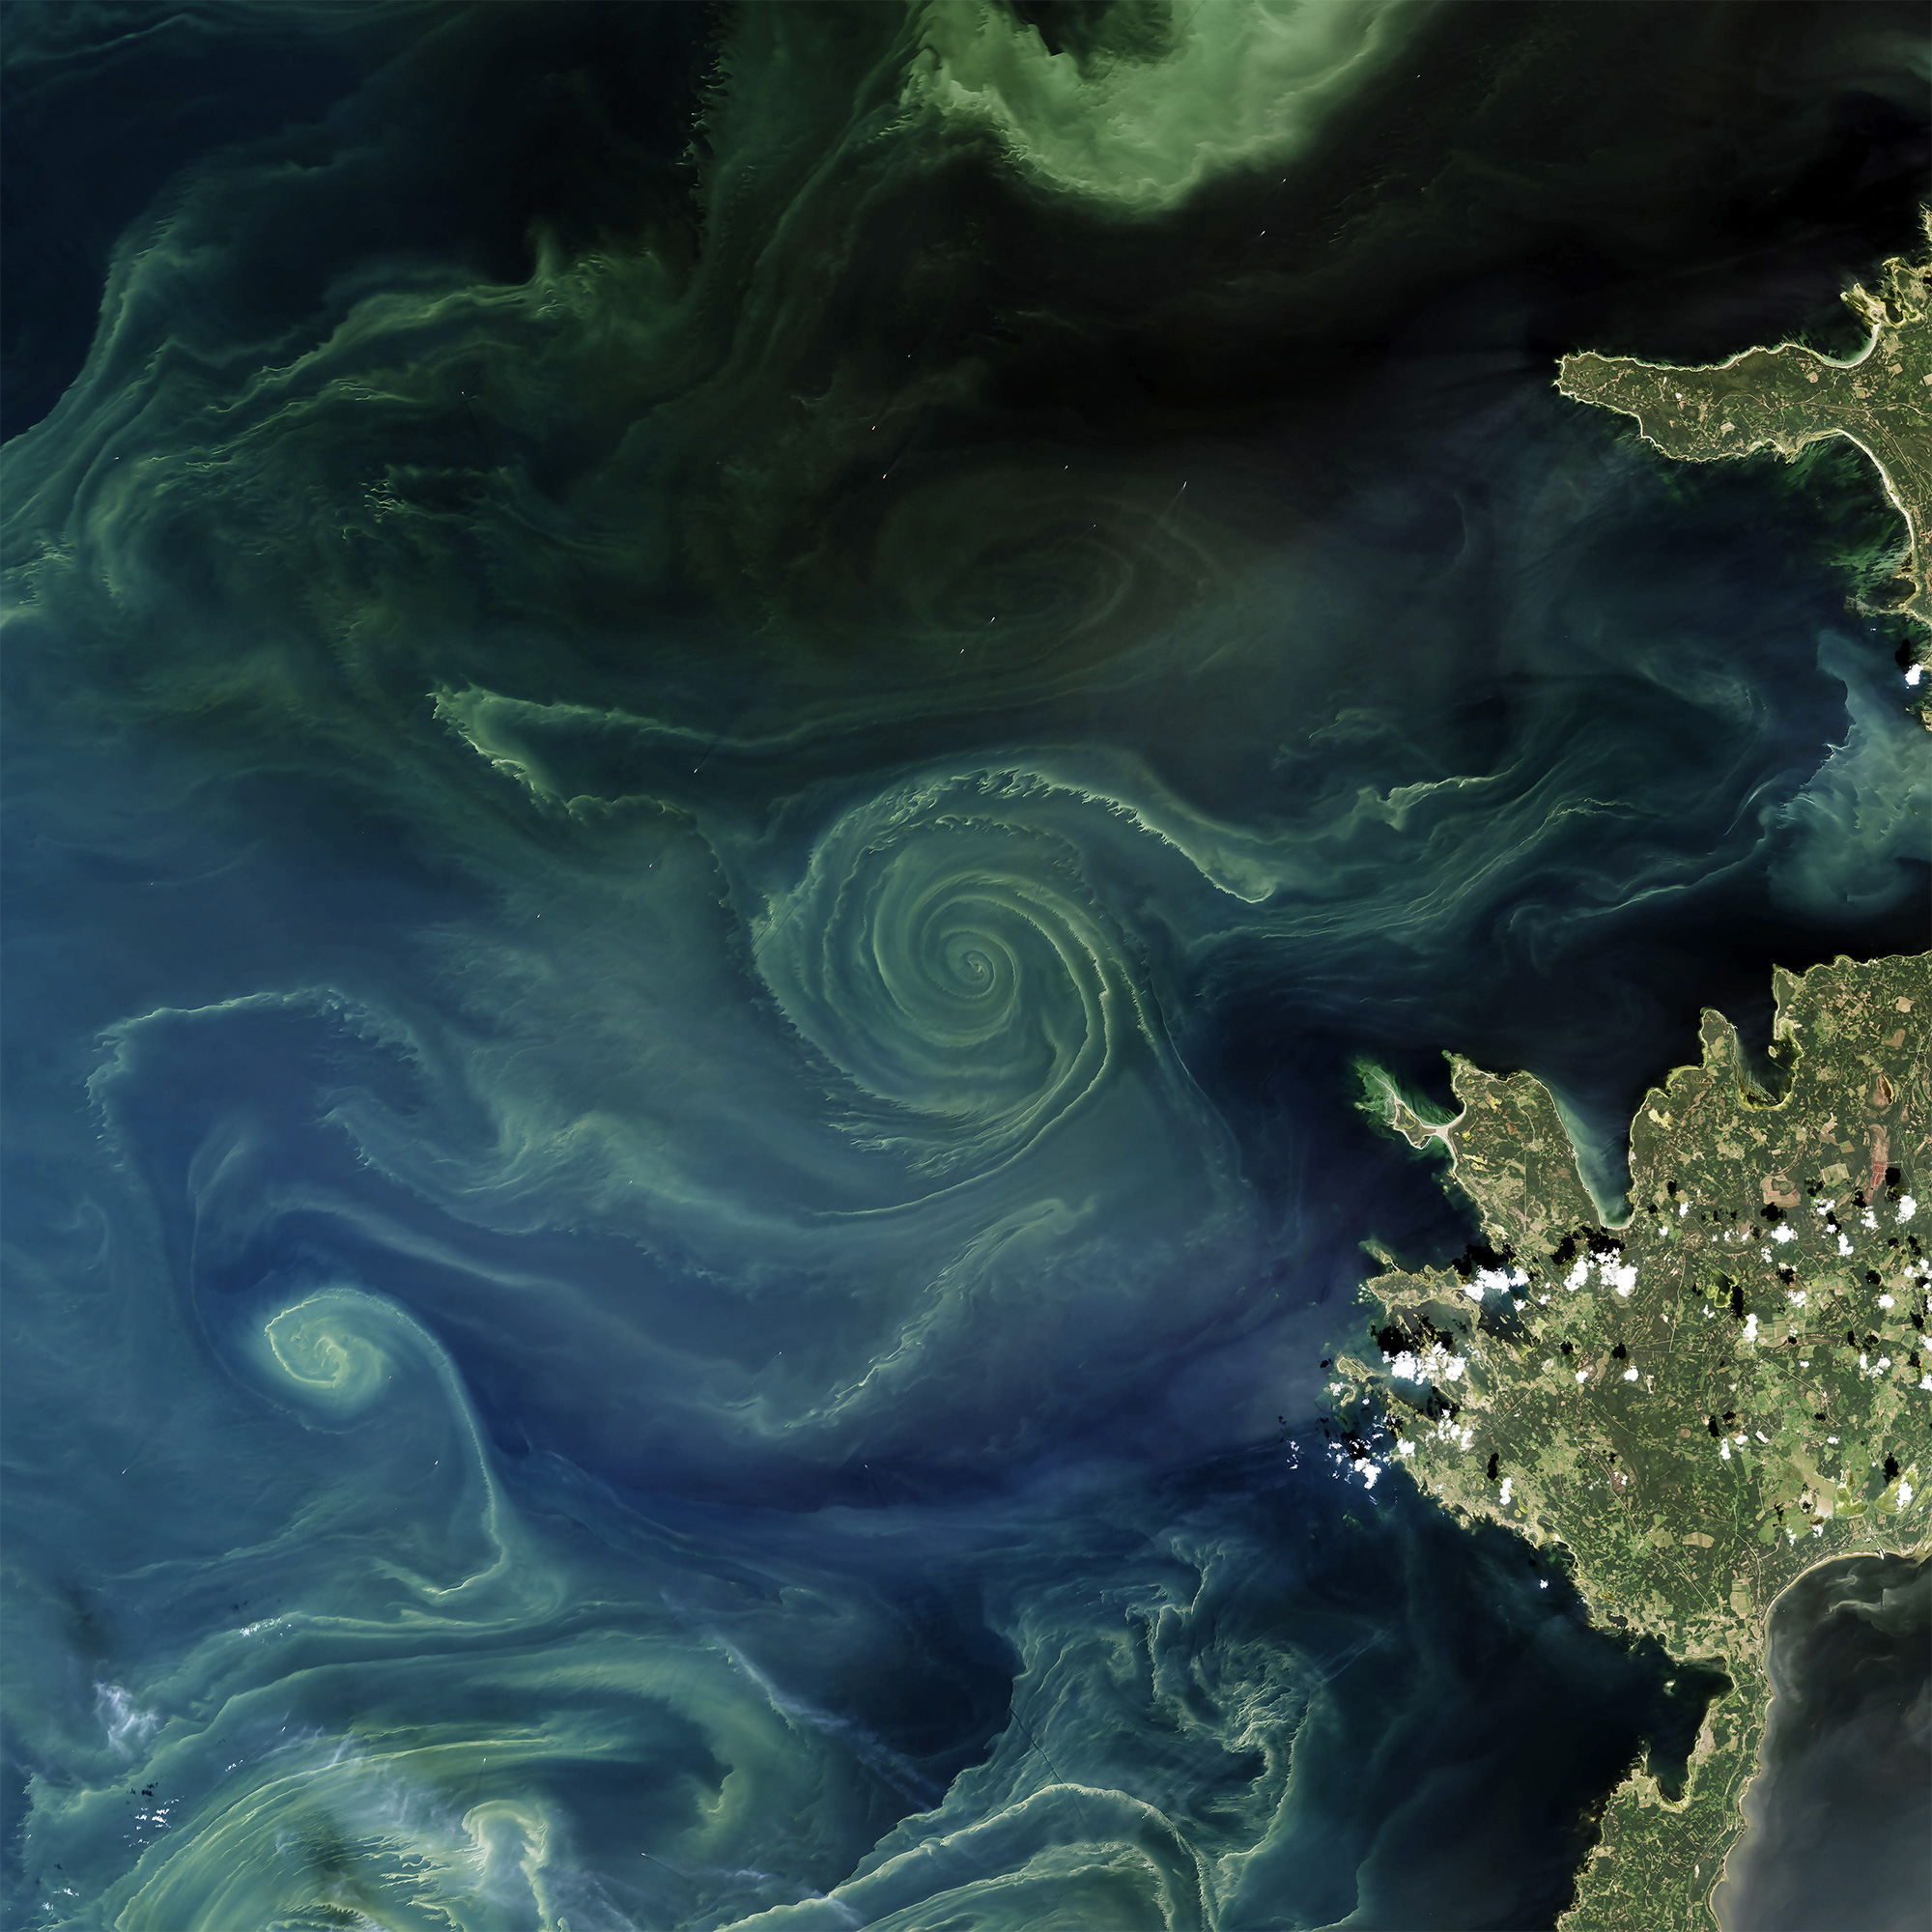 phytoplankton in ocean